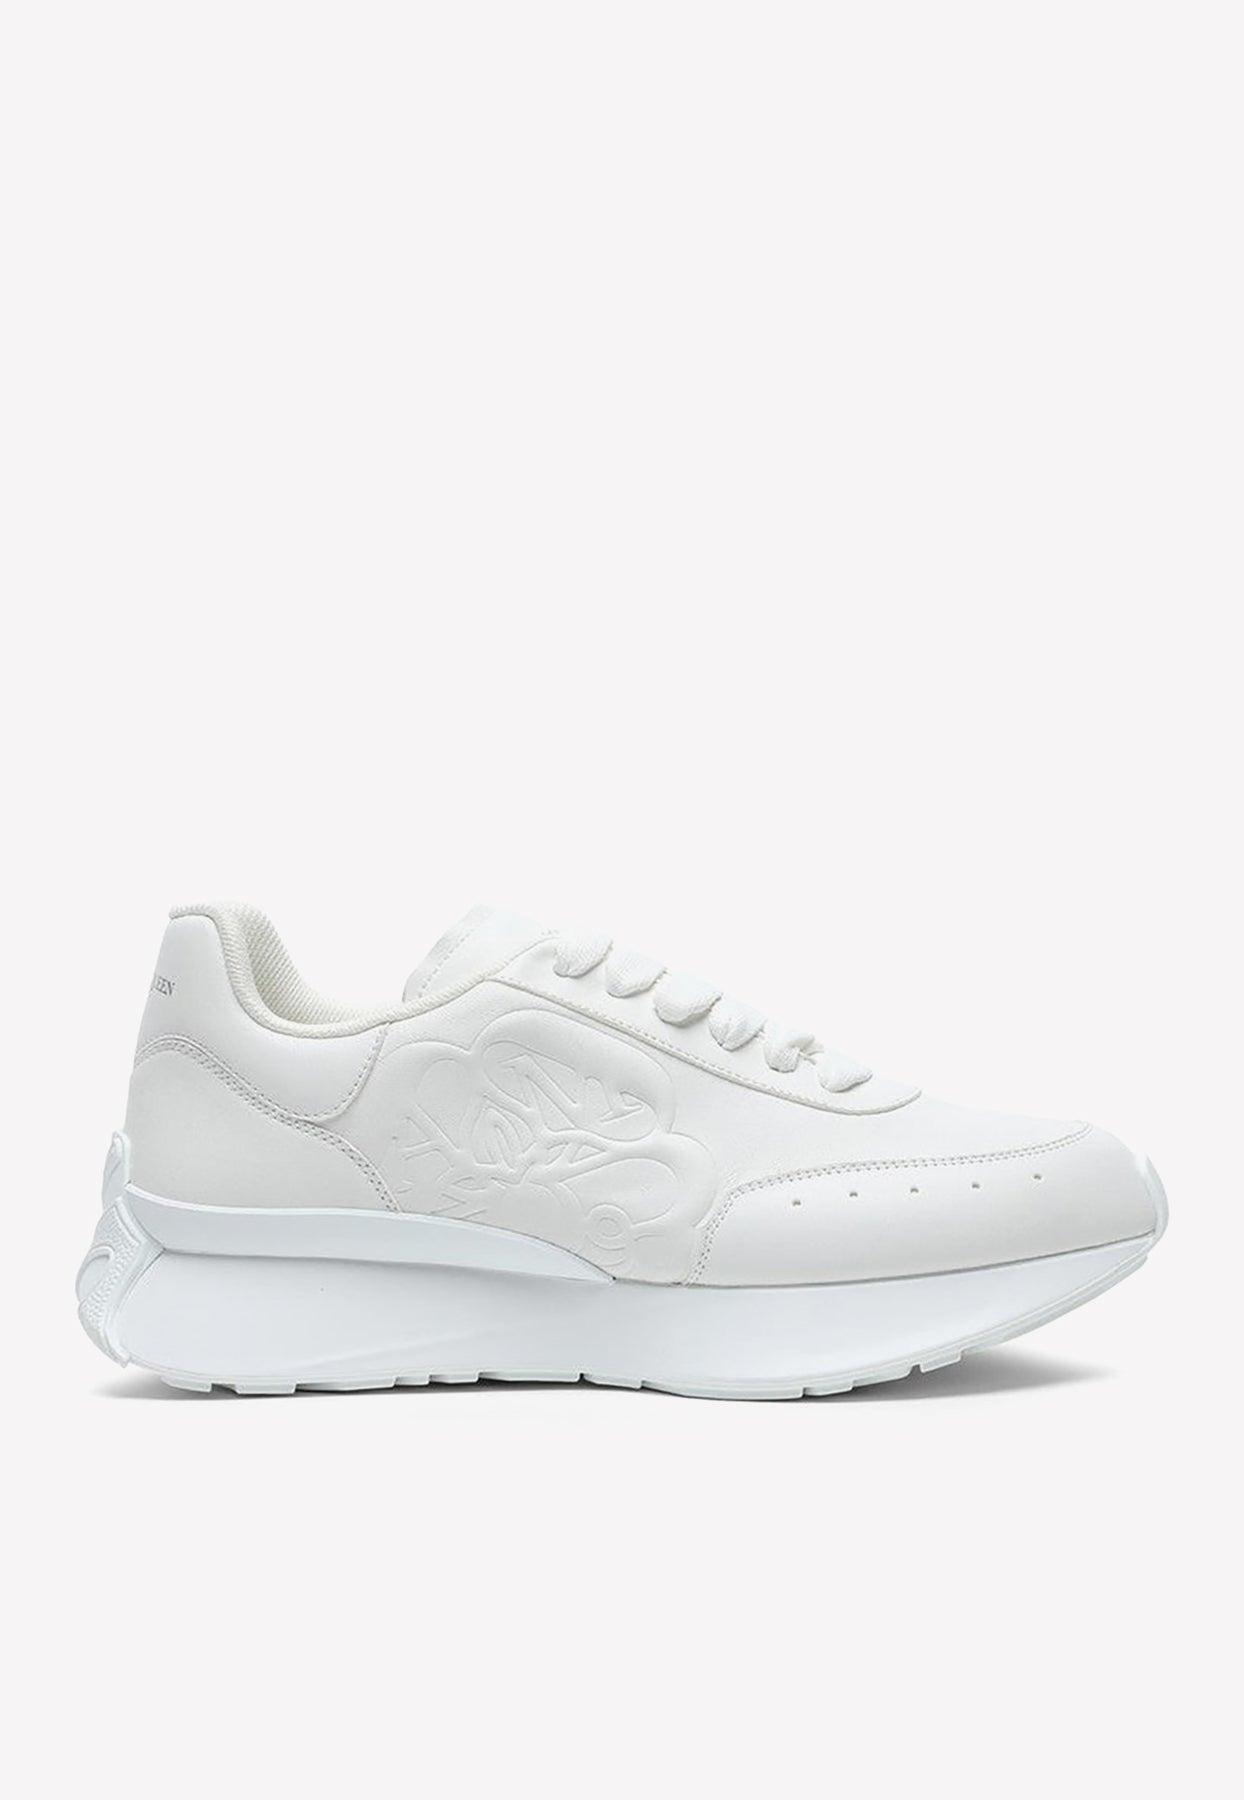 Alexander McQueen Sprint Runner Sneakers In Leather in White | Lyst